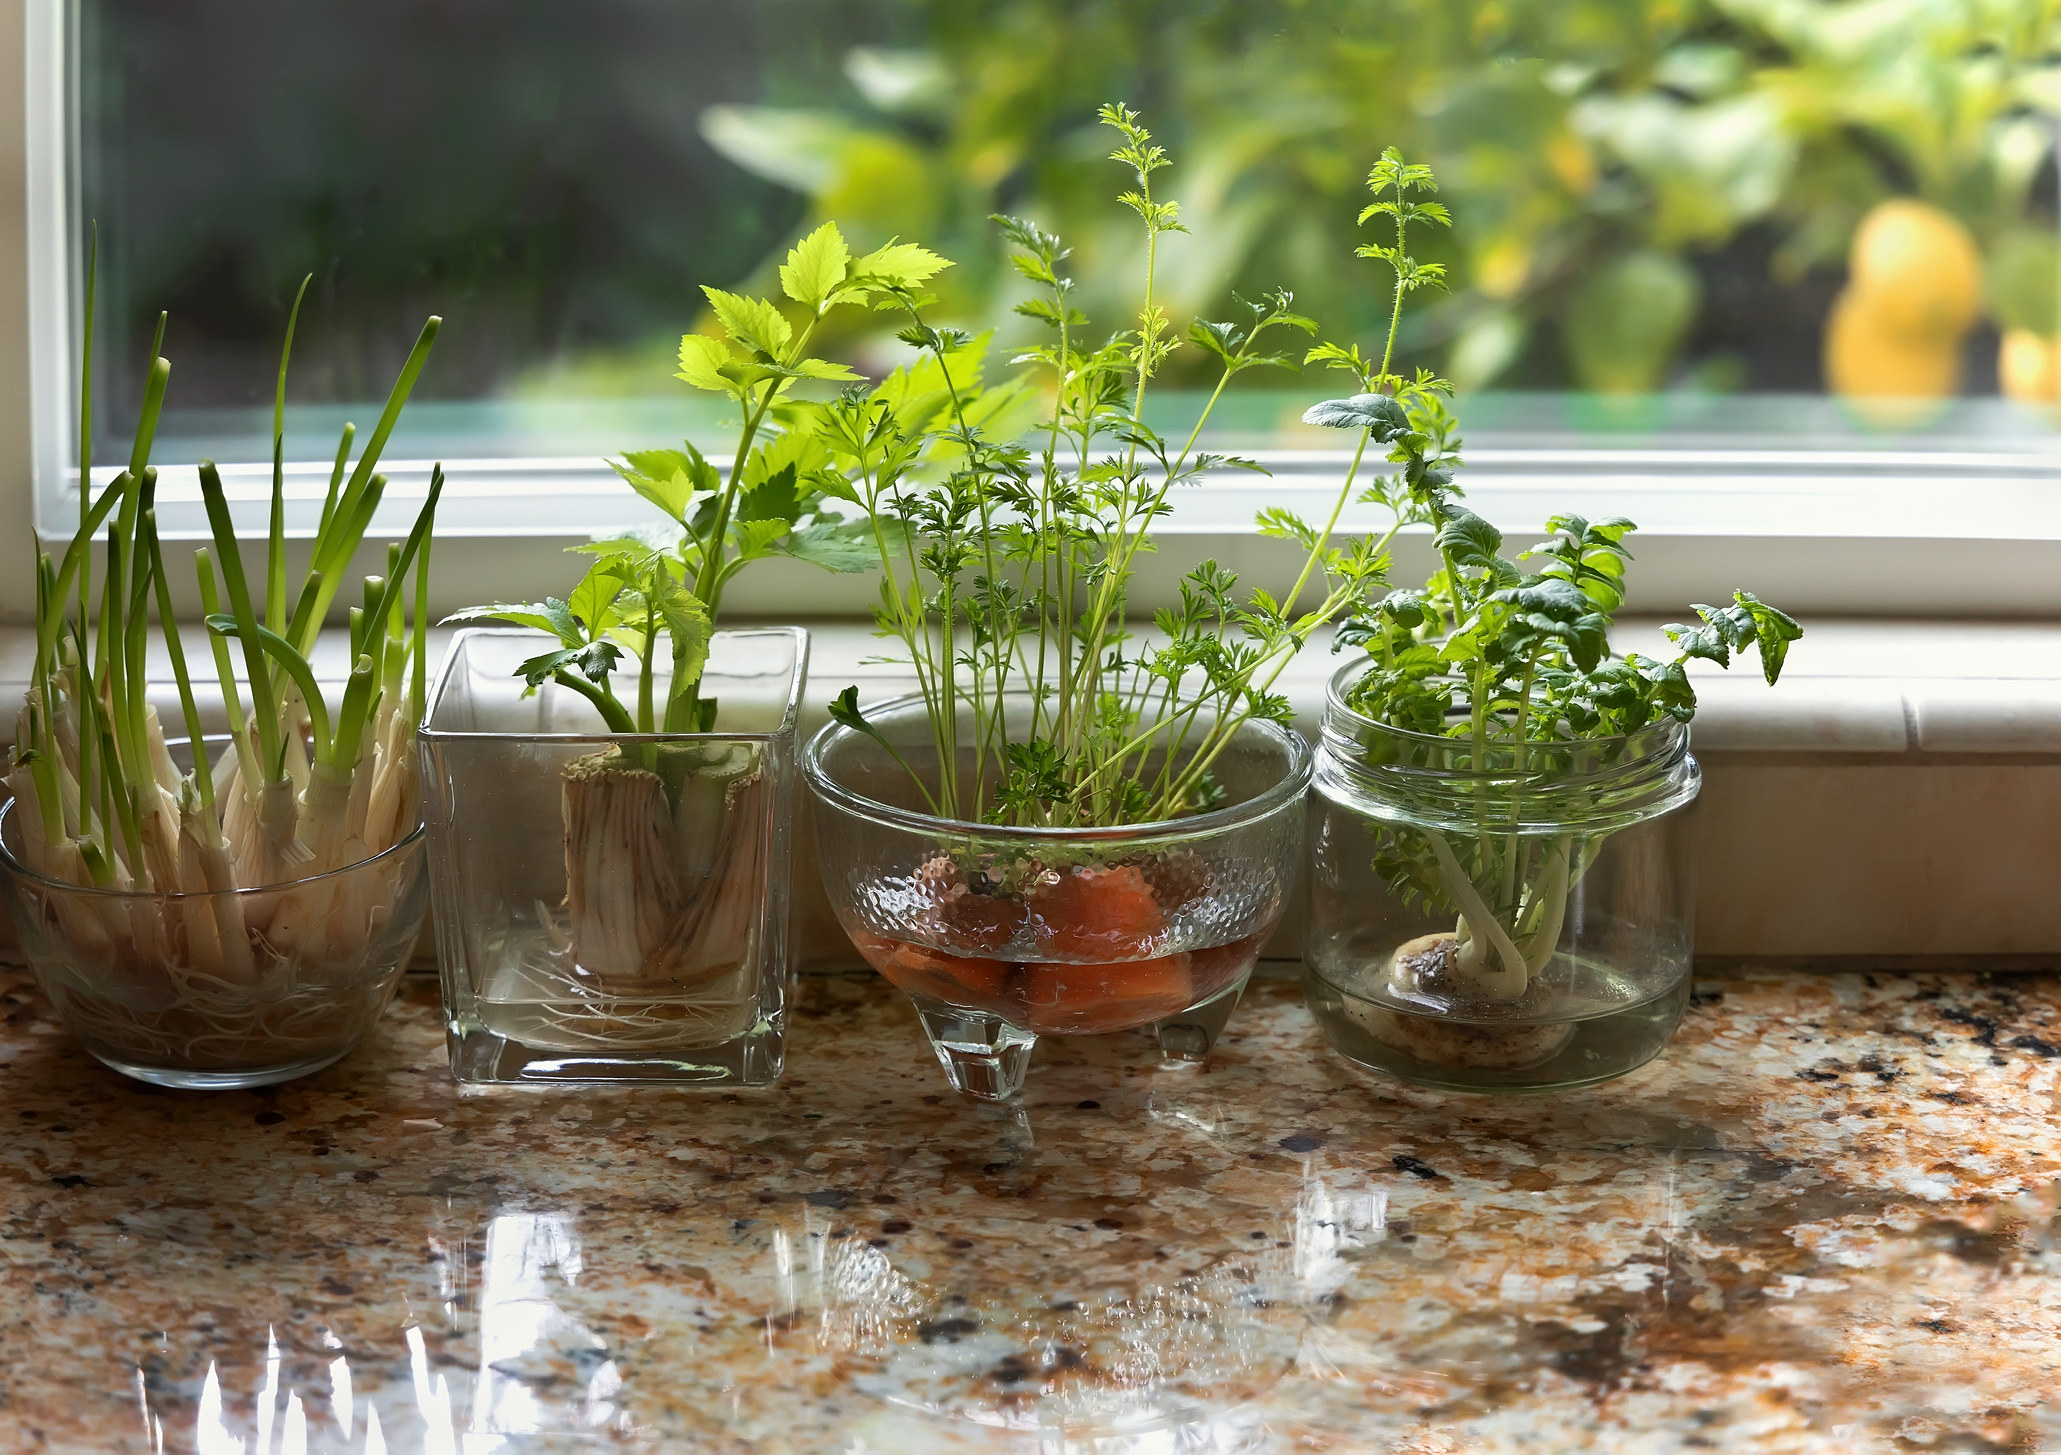 Herbs growing on countertop